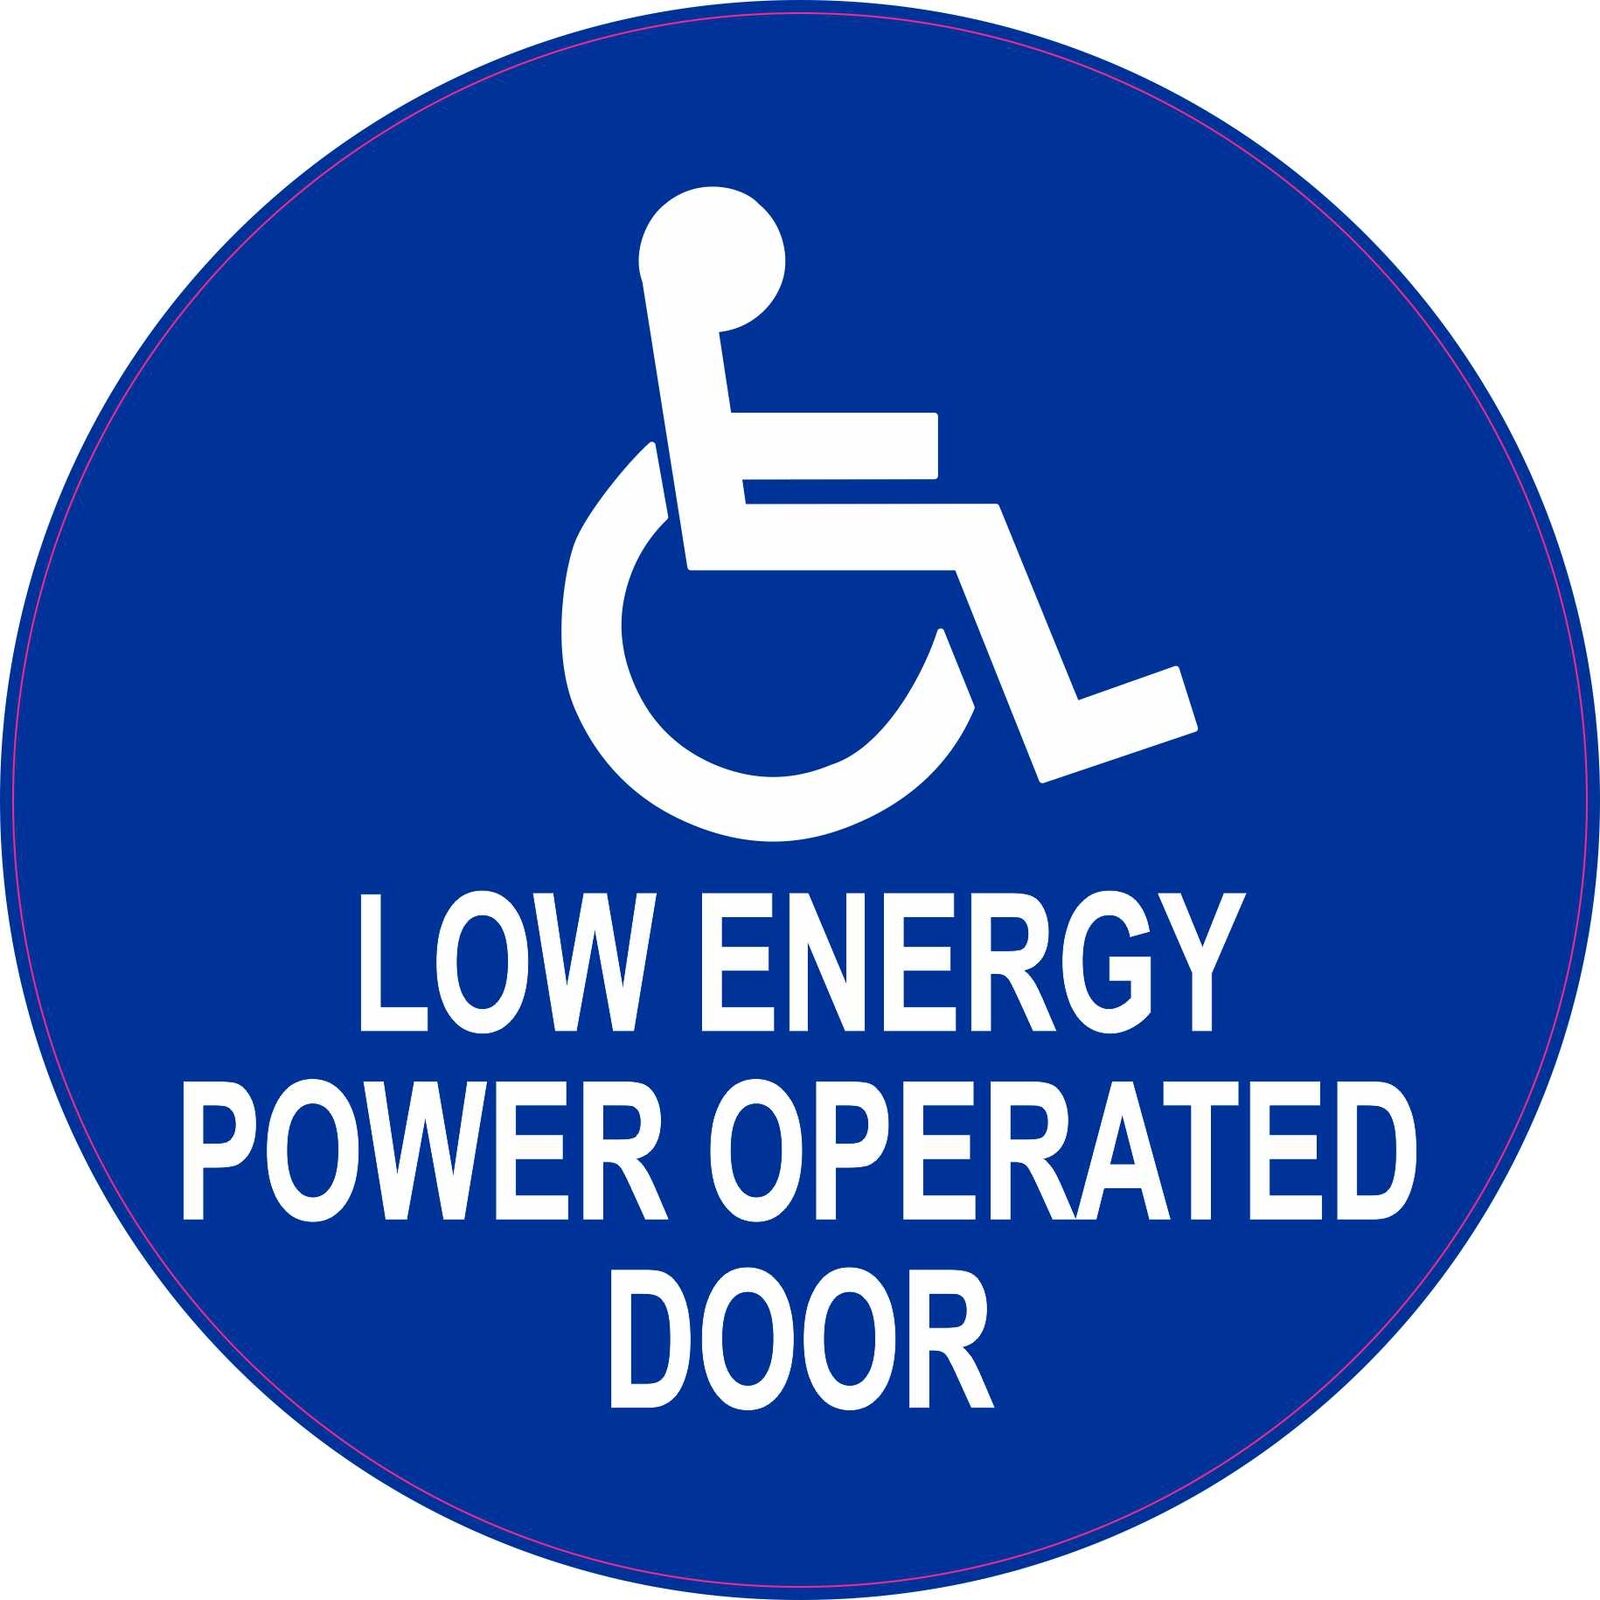 6in x 6in Low Energy Power Operated Door Vinyl Sticker Business Sign Decal